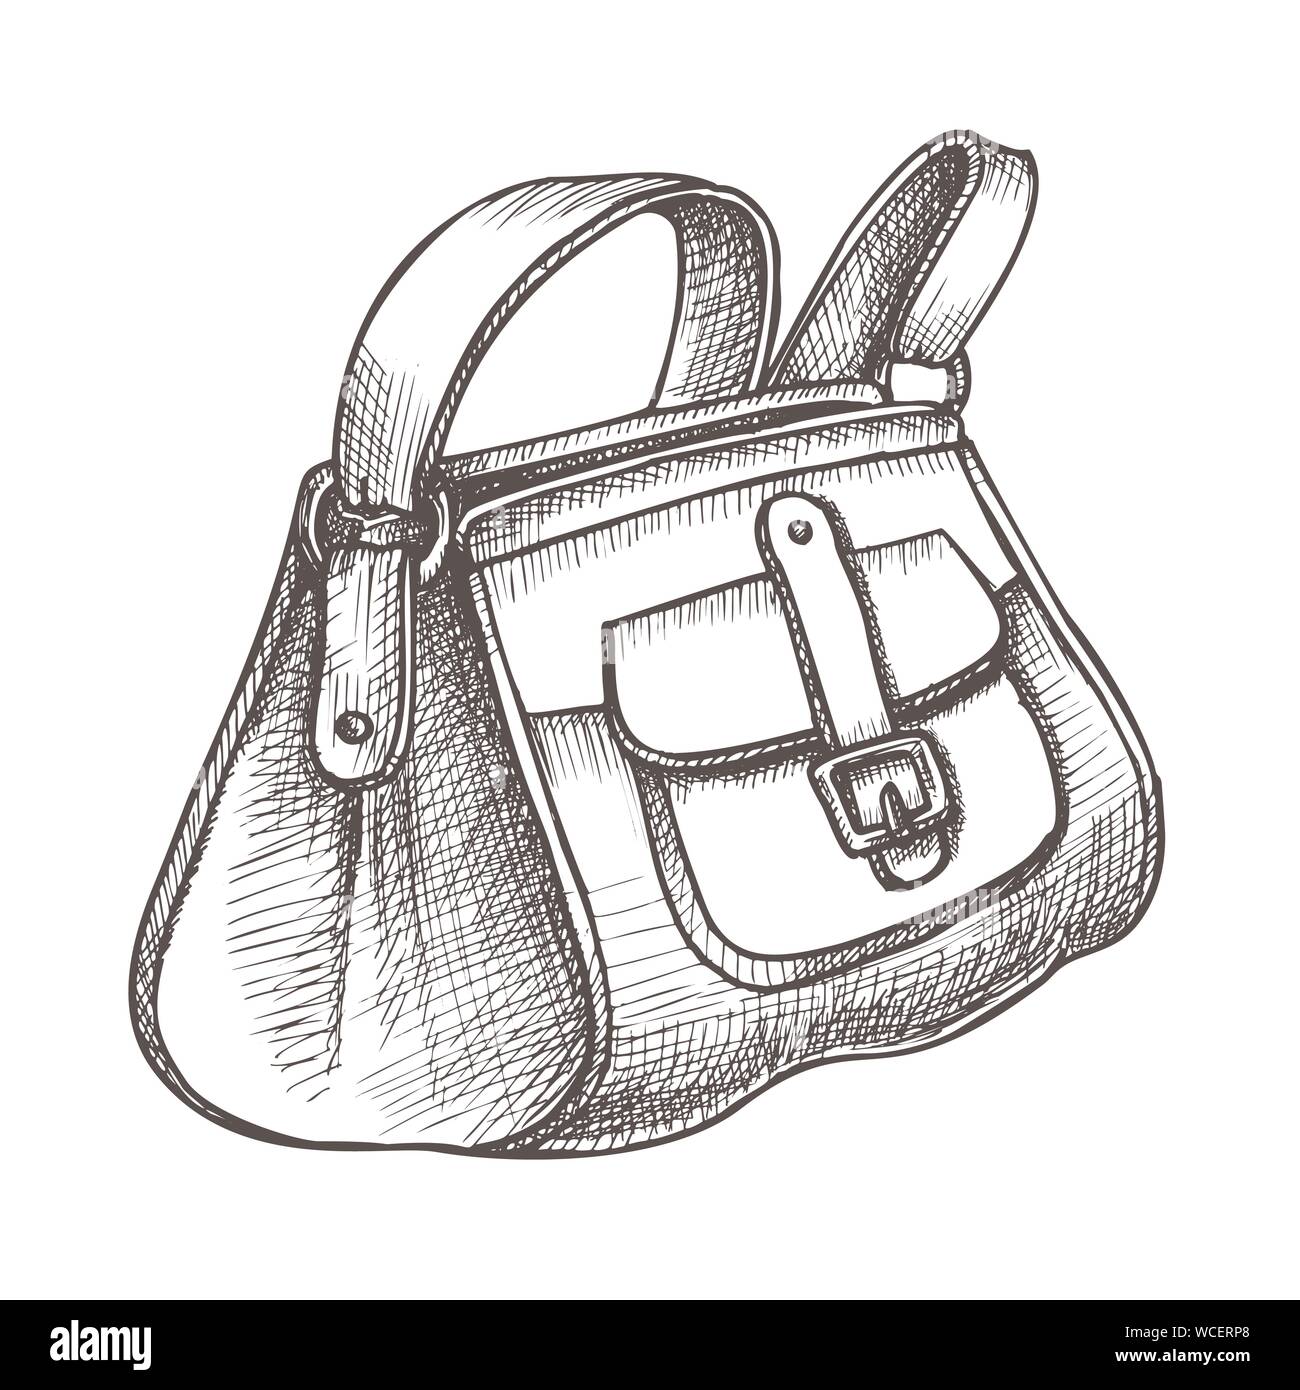 Men's messenger bag hand drawn fashion illustration, free image by  rawpixel.com / ton